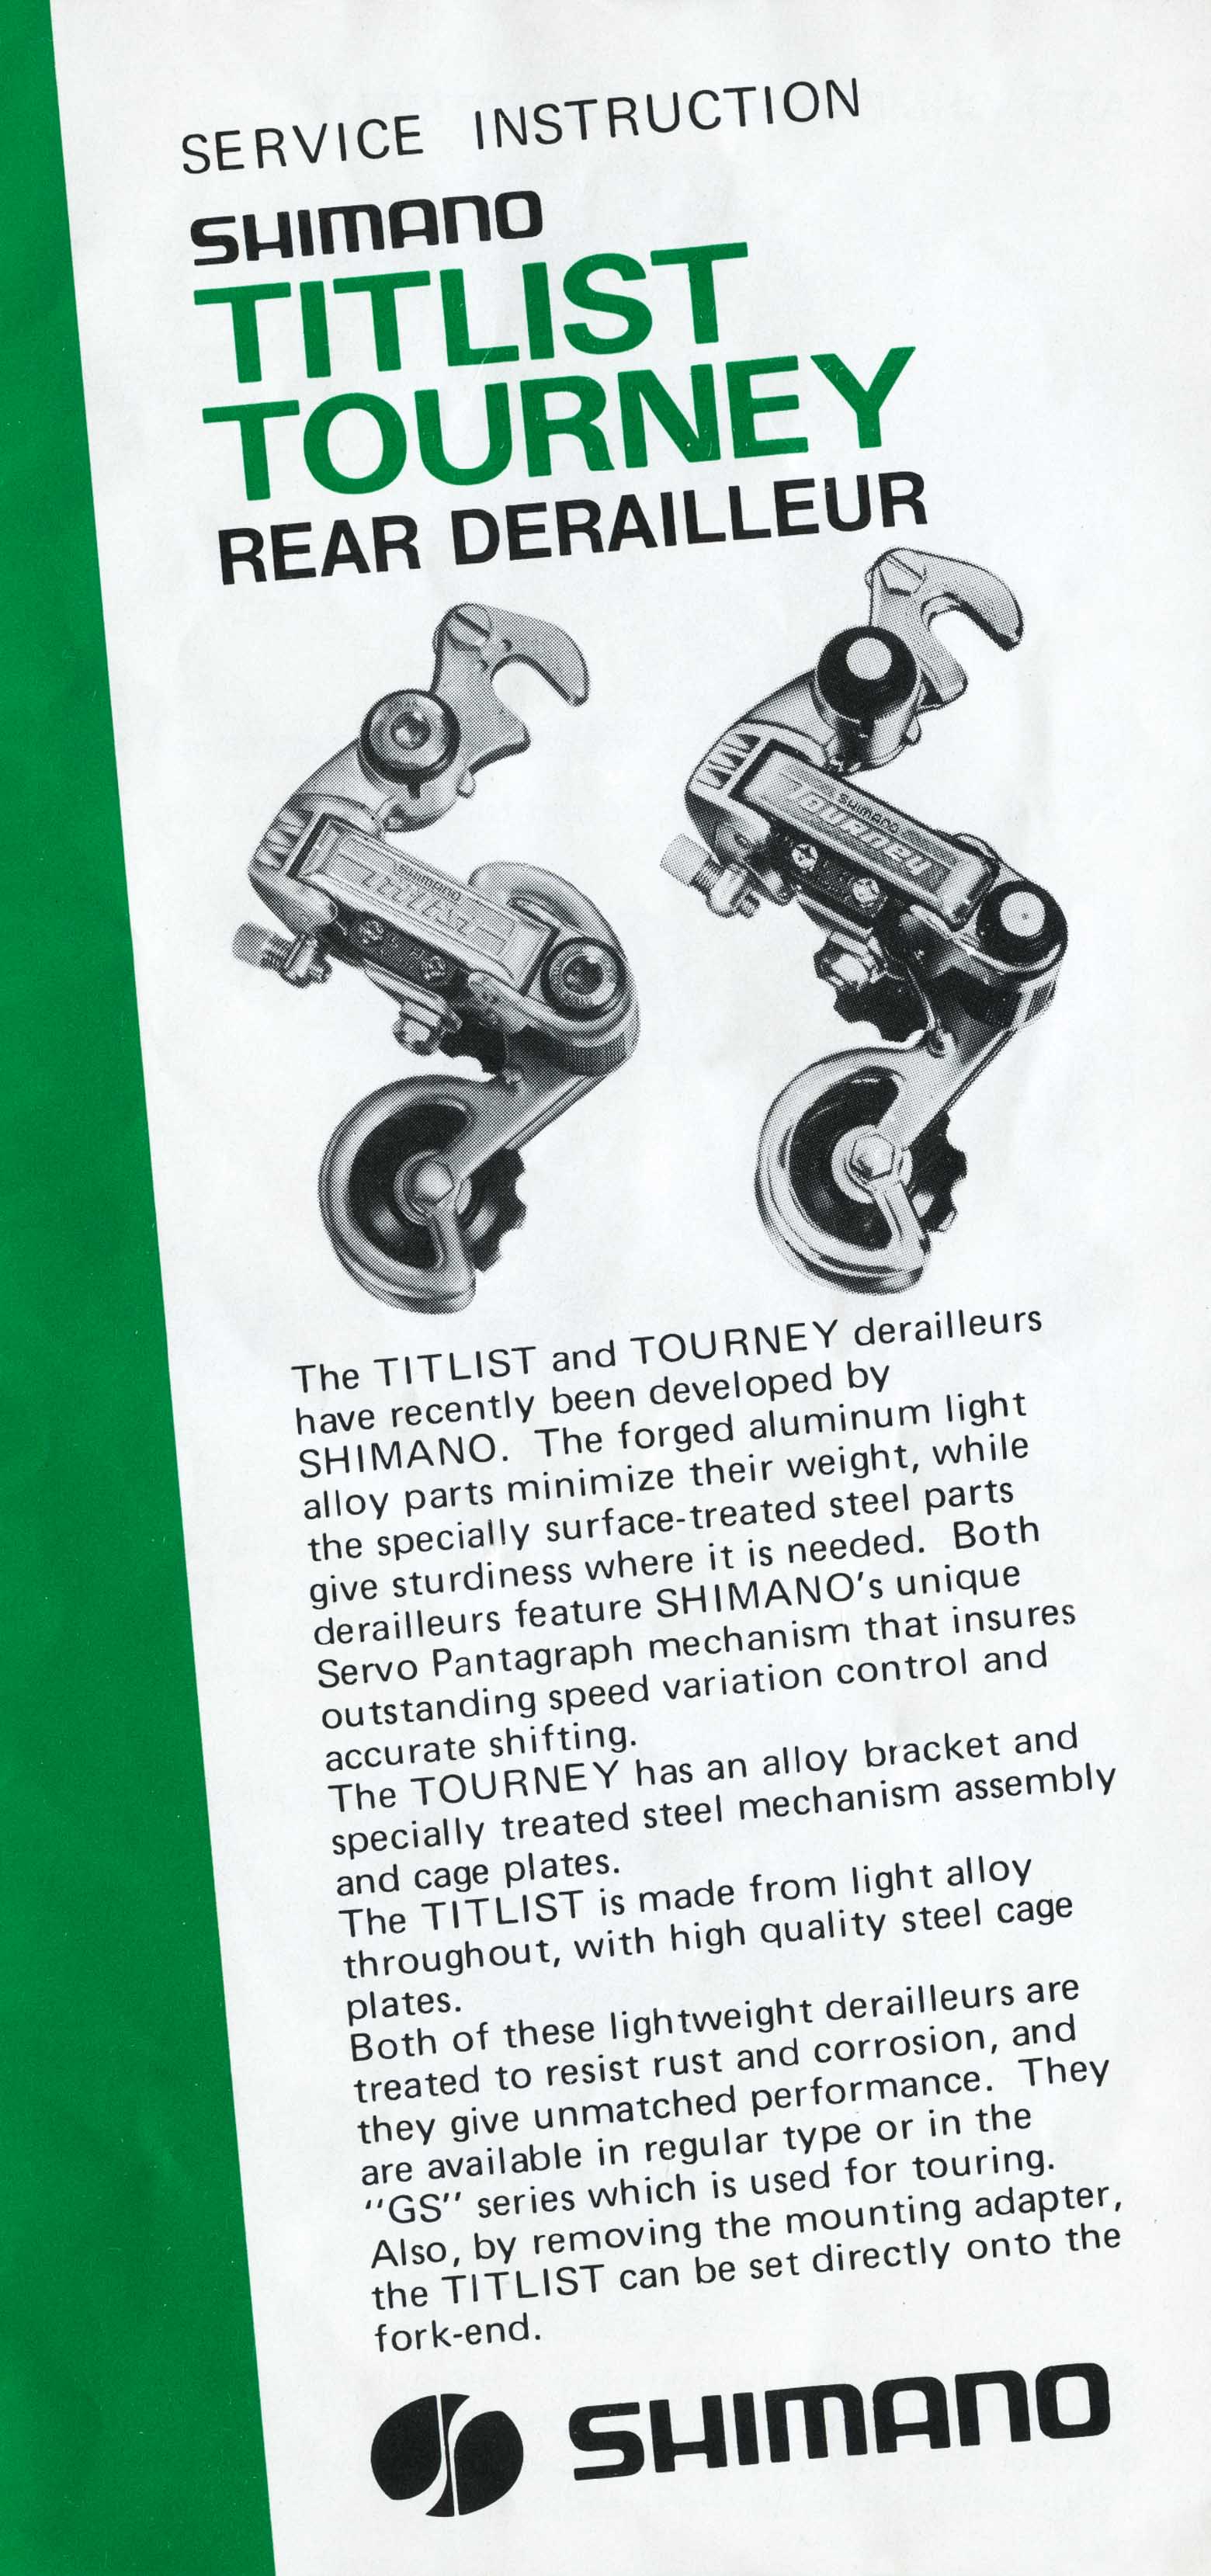 Service Instruction - Shimano Titlist Tourney scan 01 main image